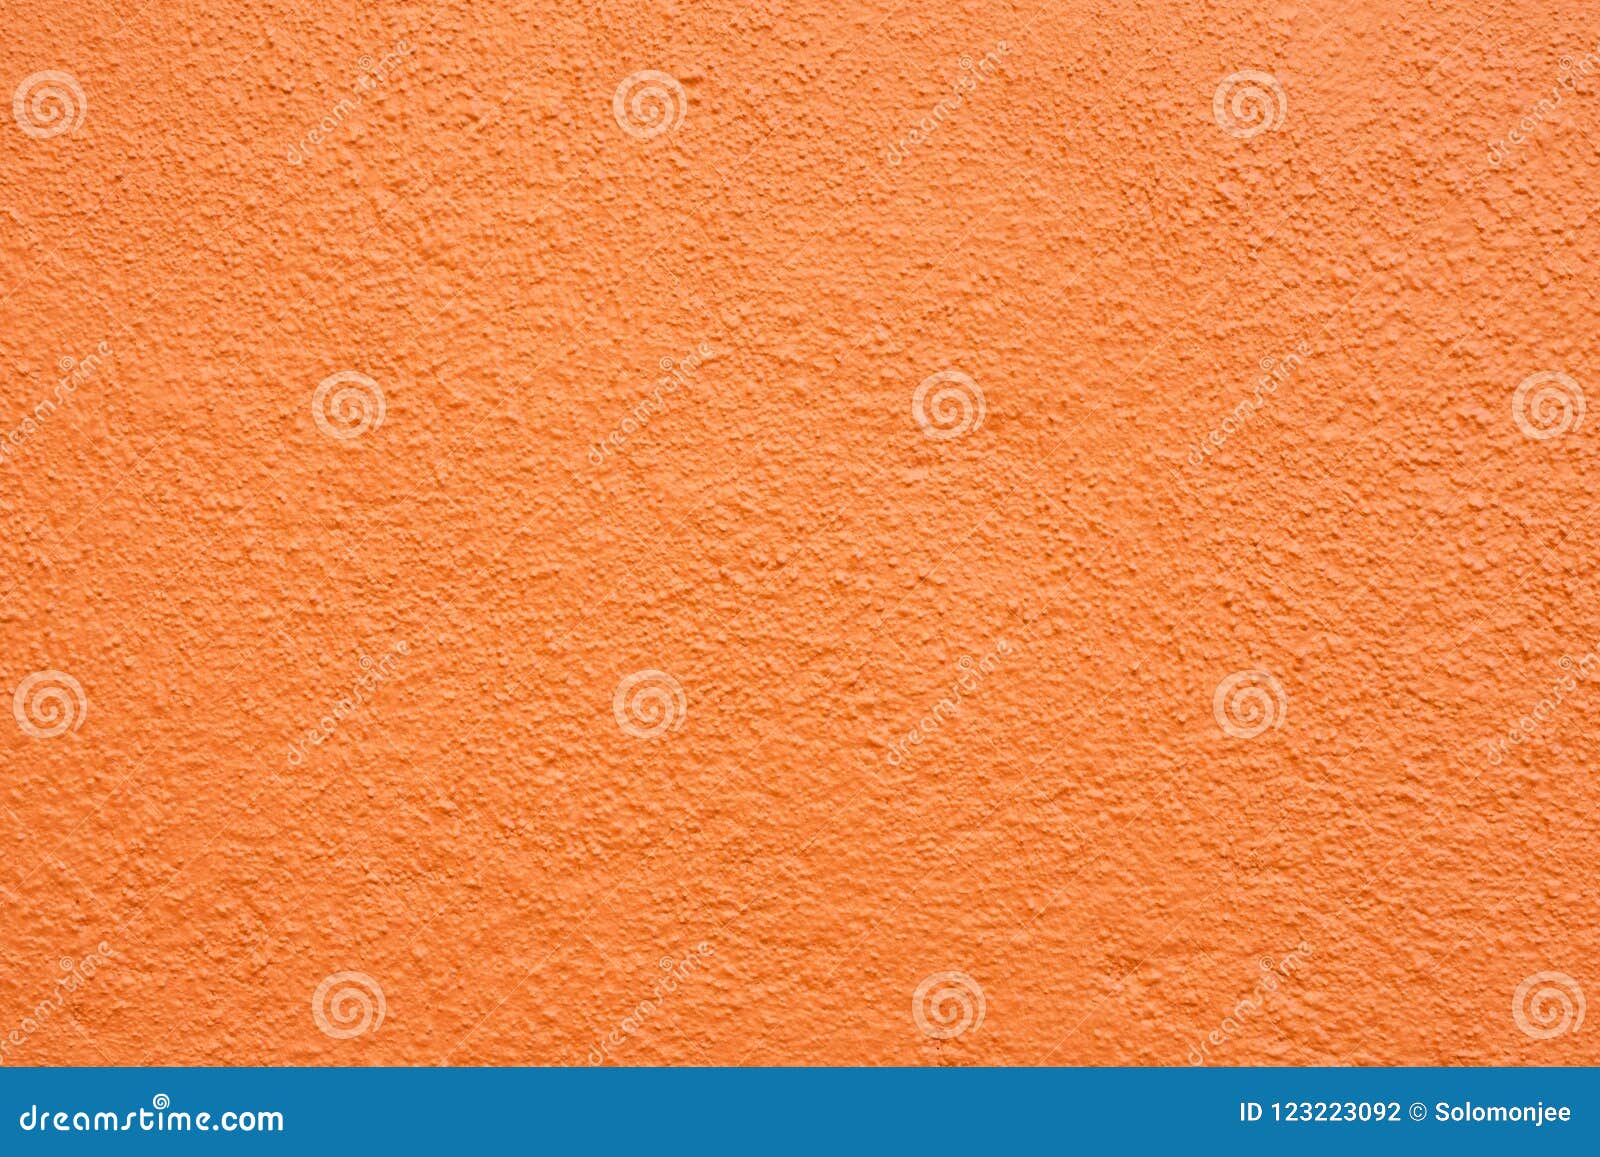 orange stucco wall